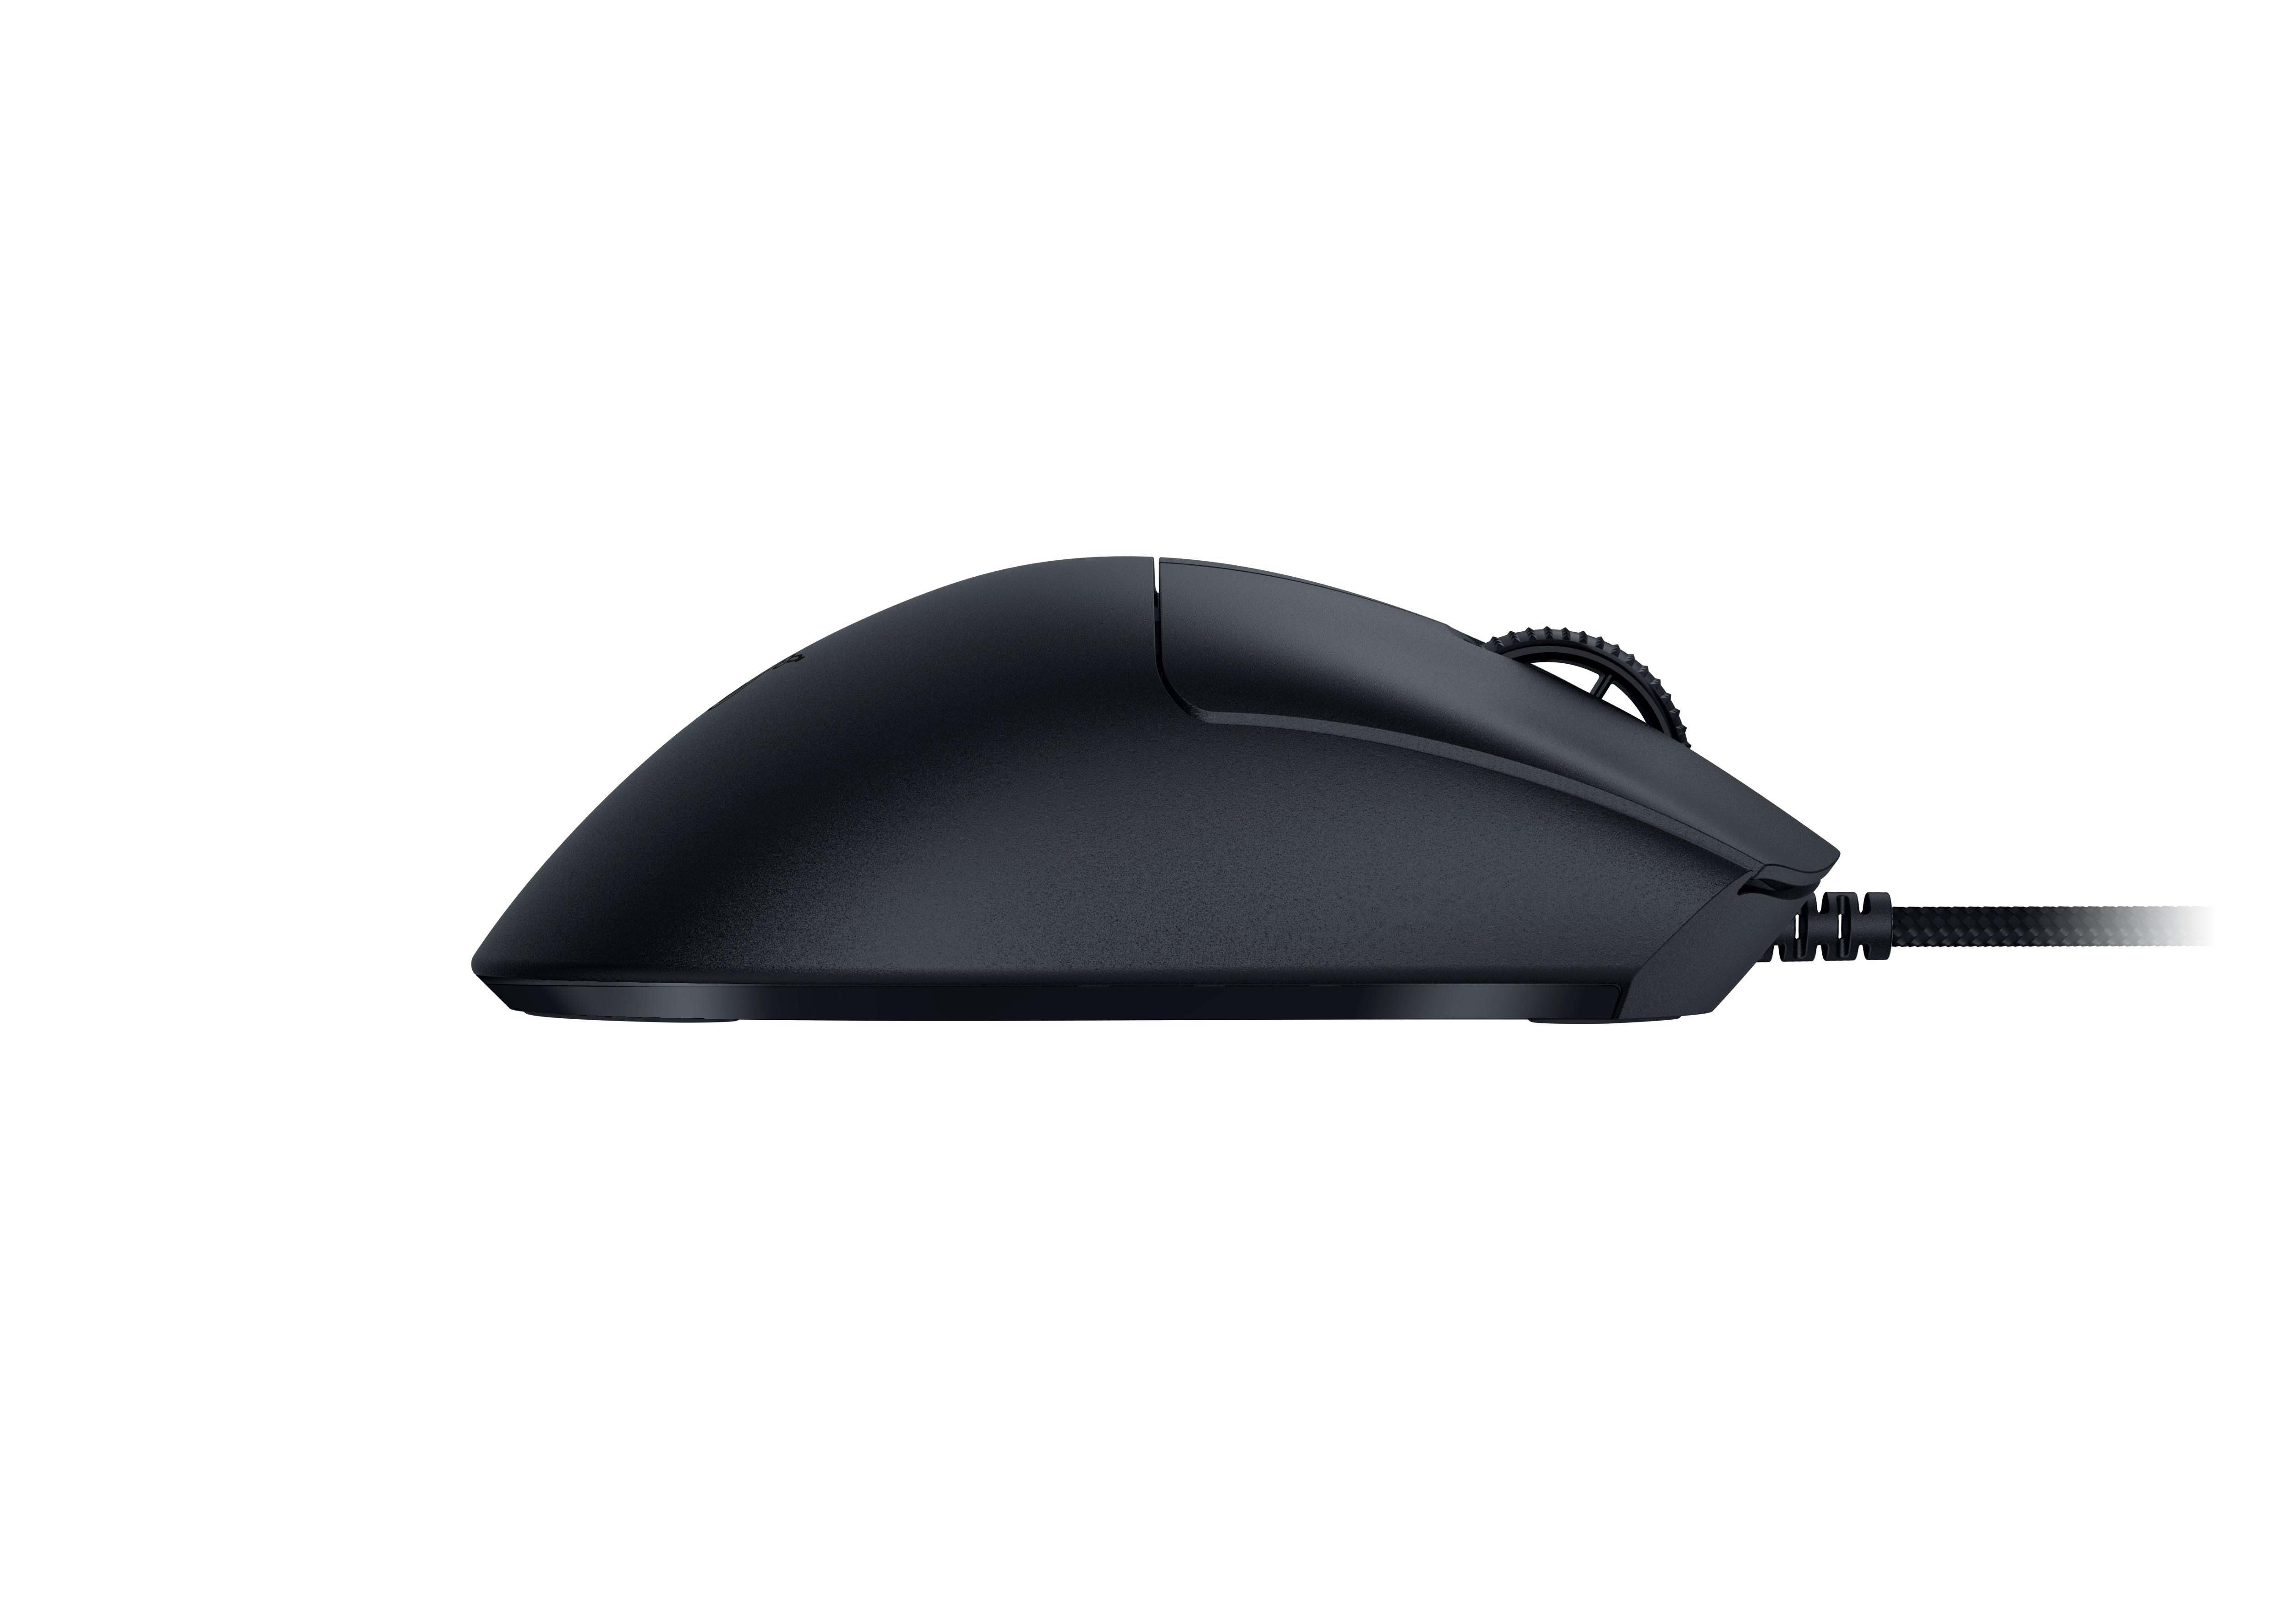 Razer DeathAdder V3 Wired Gaming Mouse with Chroma RGB Lighting - Black